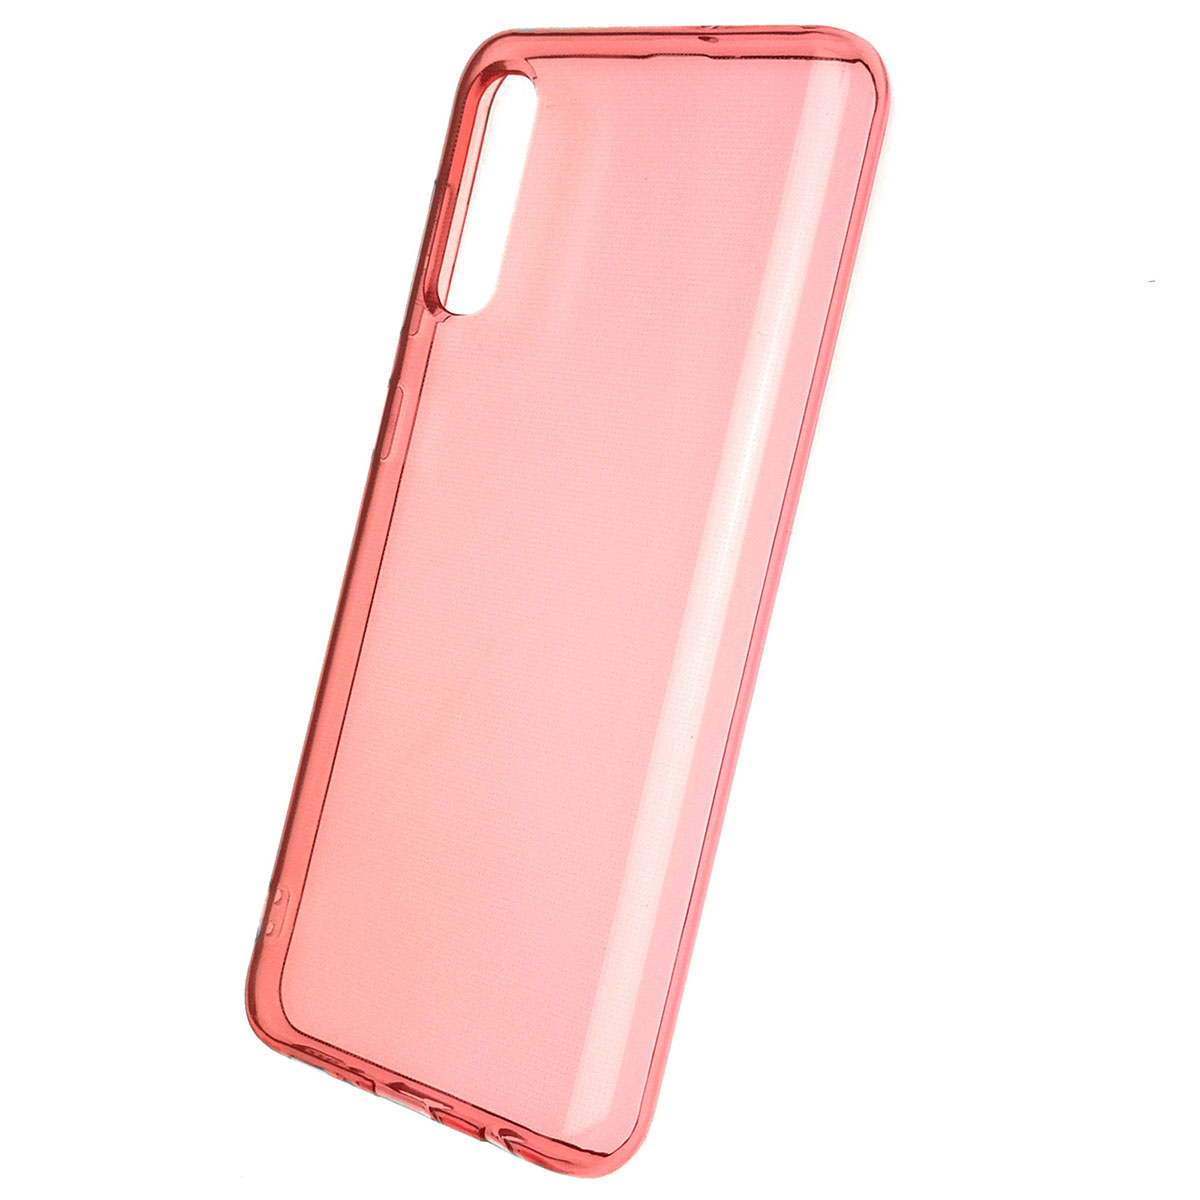 Чехол накладка Clear Case для SAMSUNG Galaxy A50 (SM-A505), A30s (SM-A307), A50s (SM-A507), силикон, прозрачно красный.